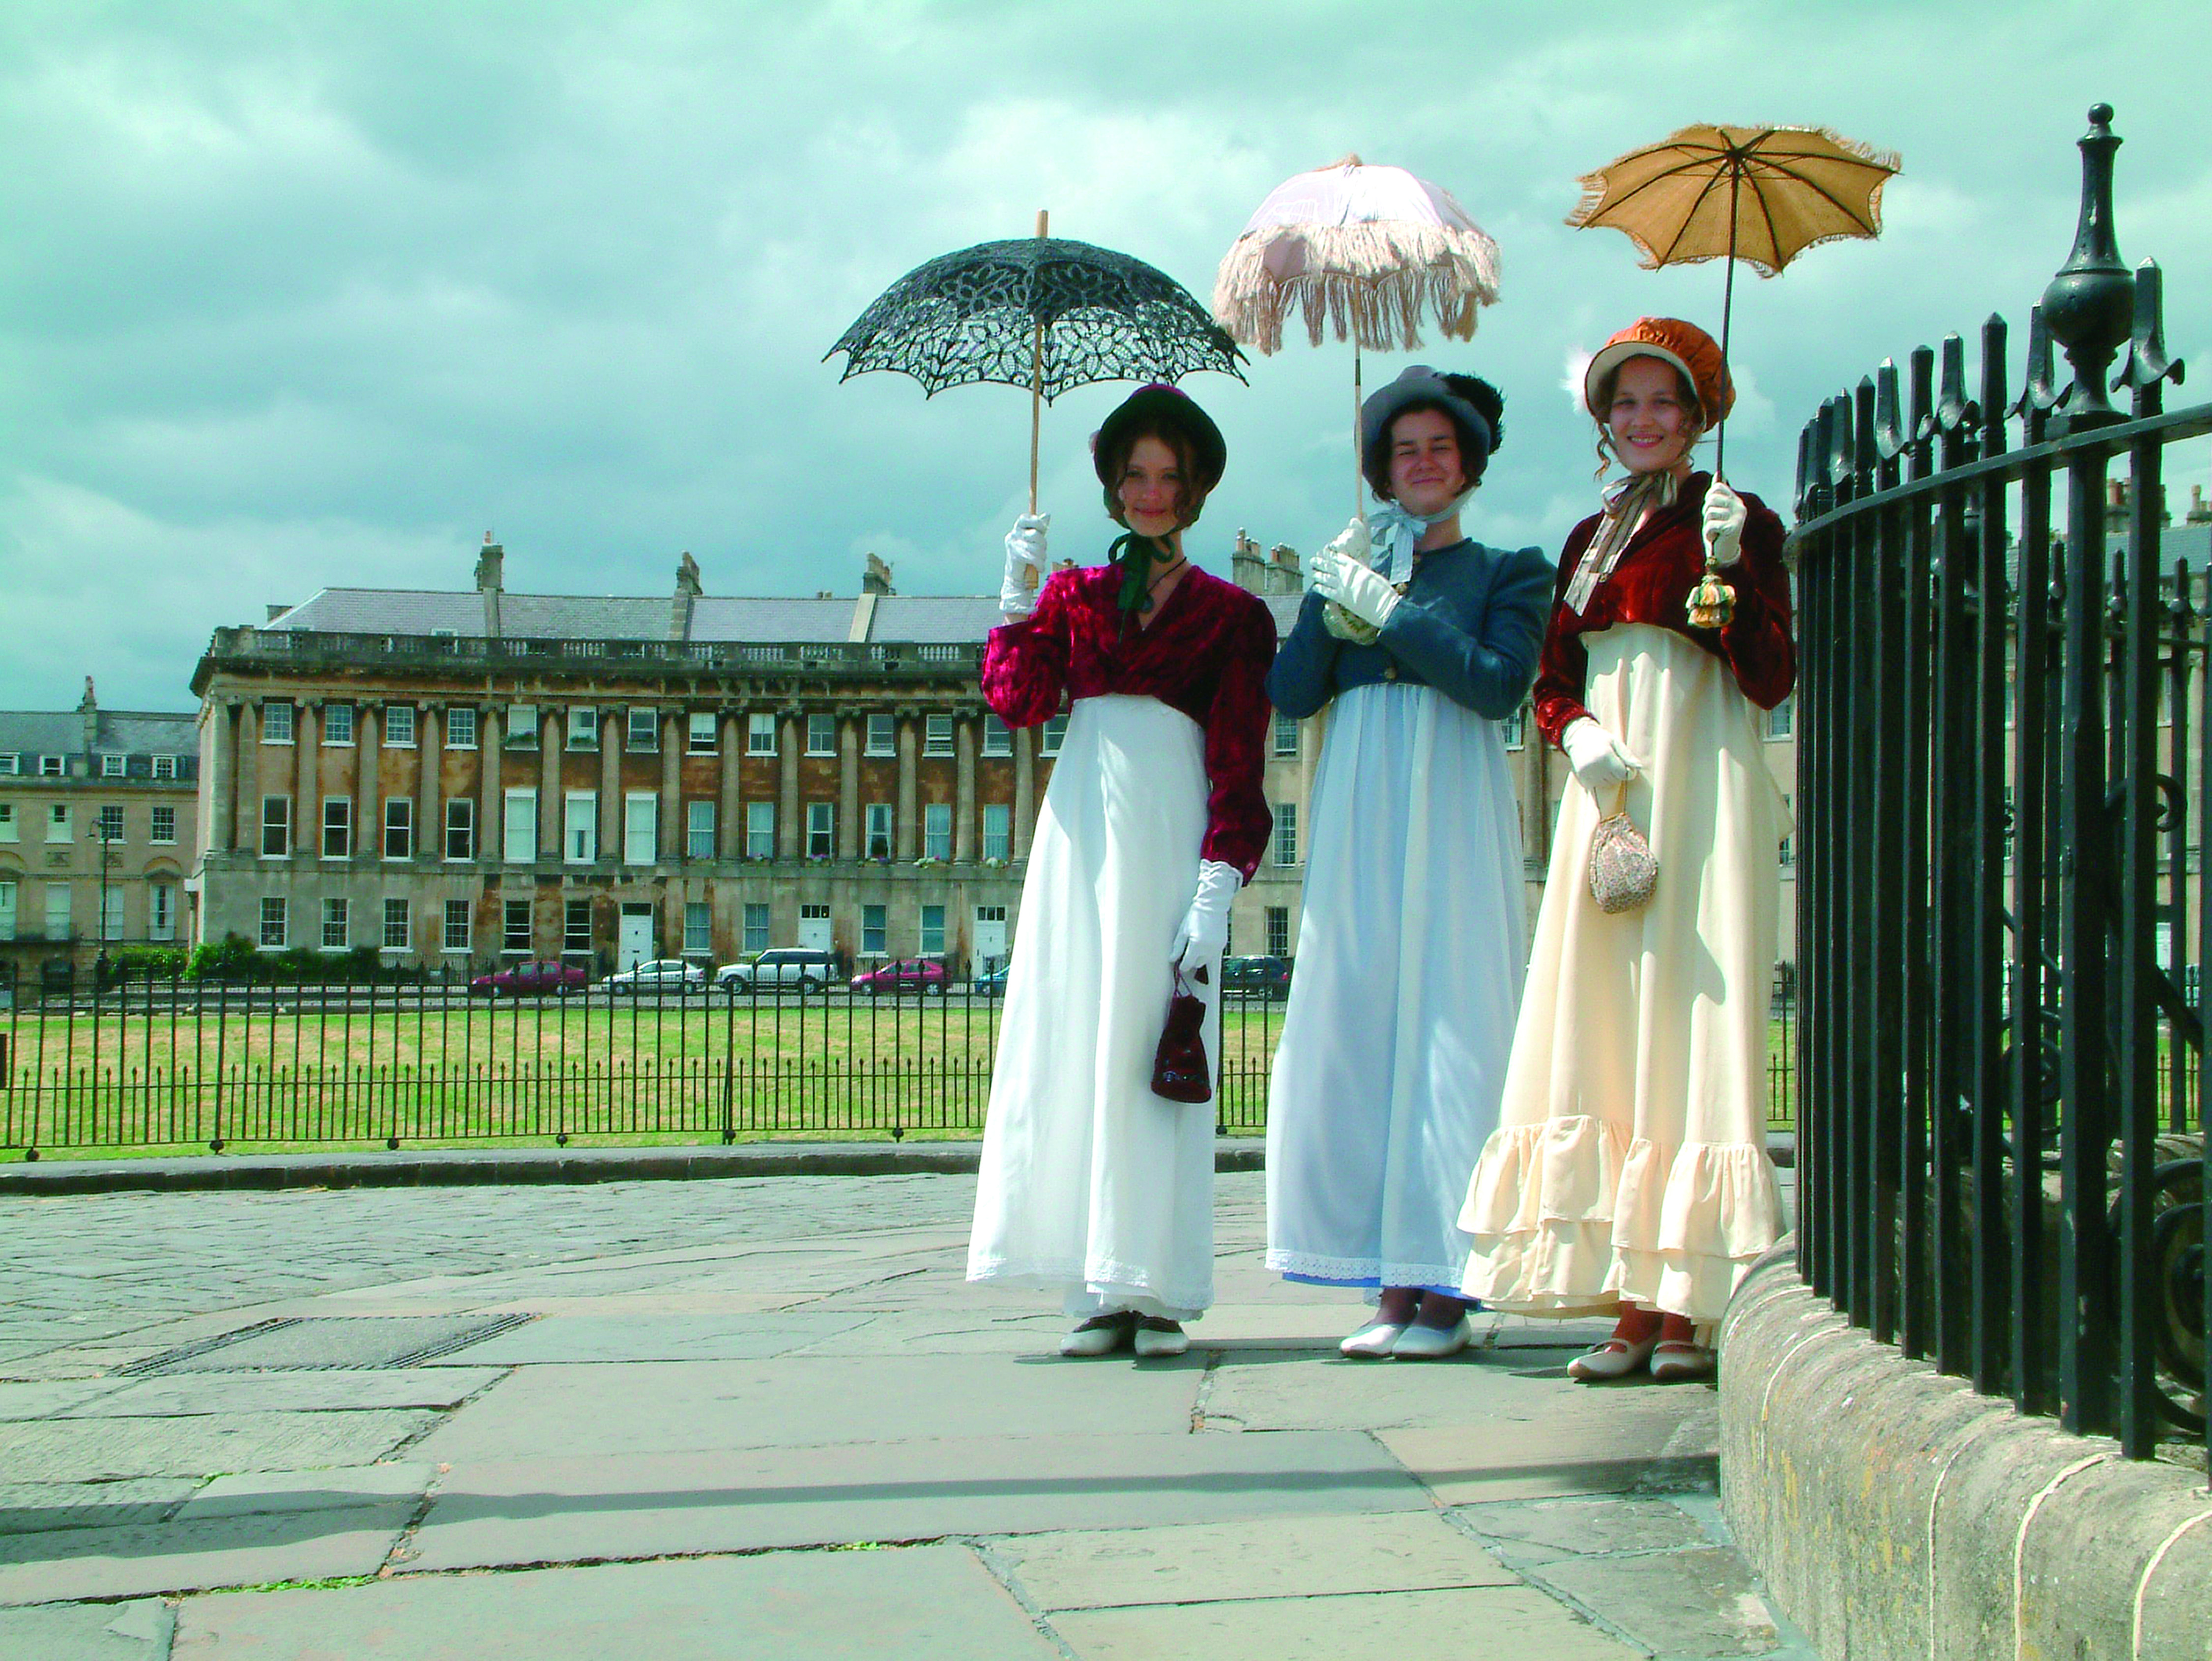 Three women in period costume at the Jane Austen Festival